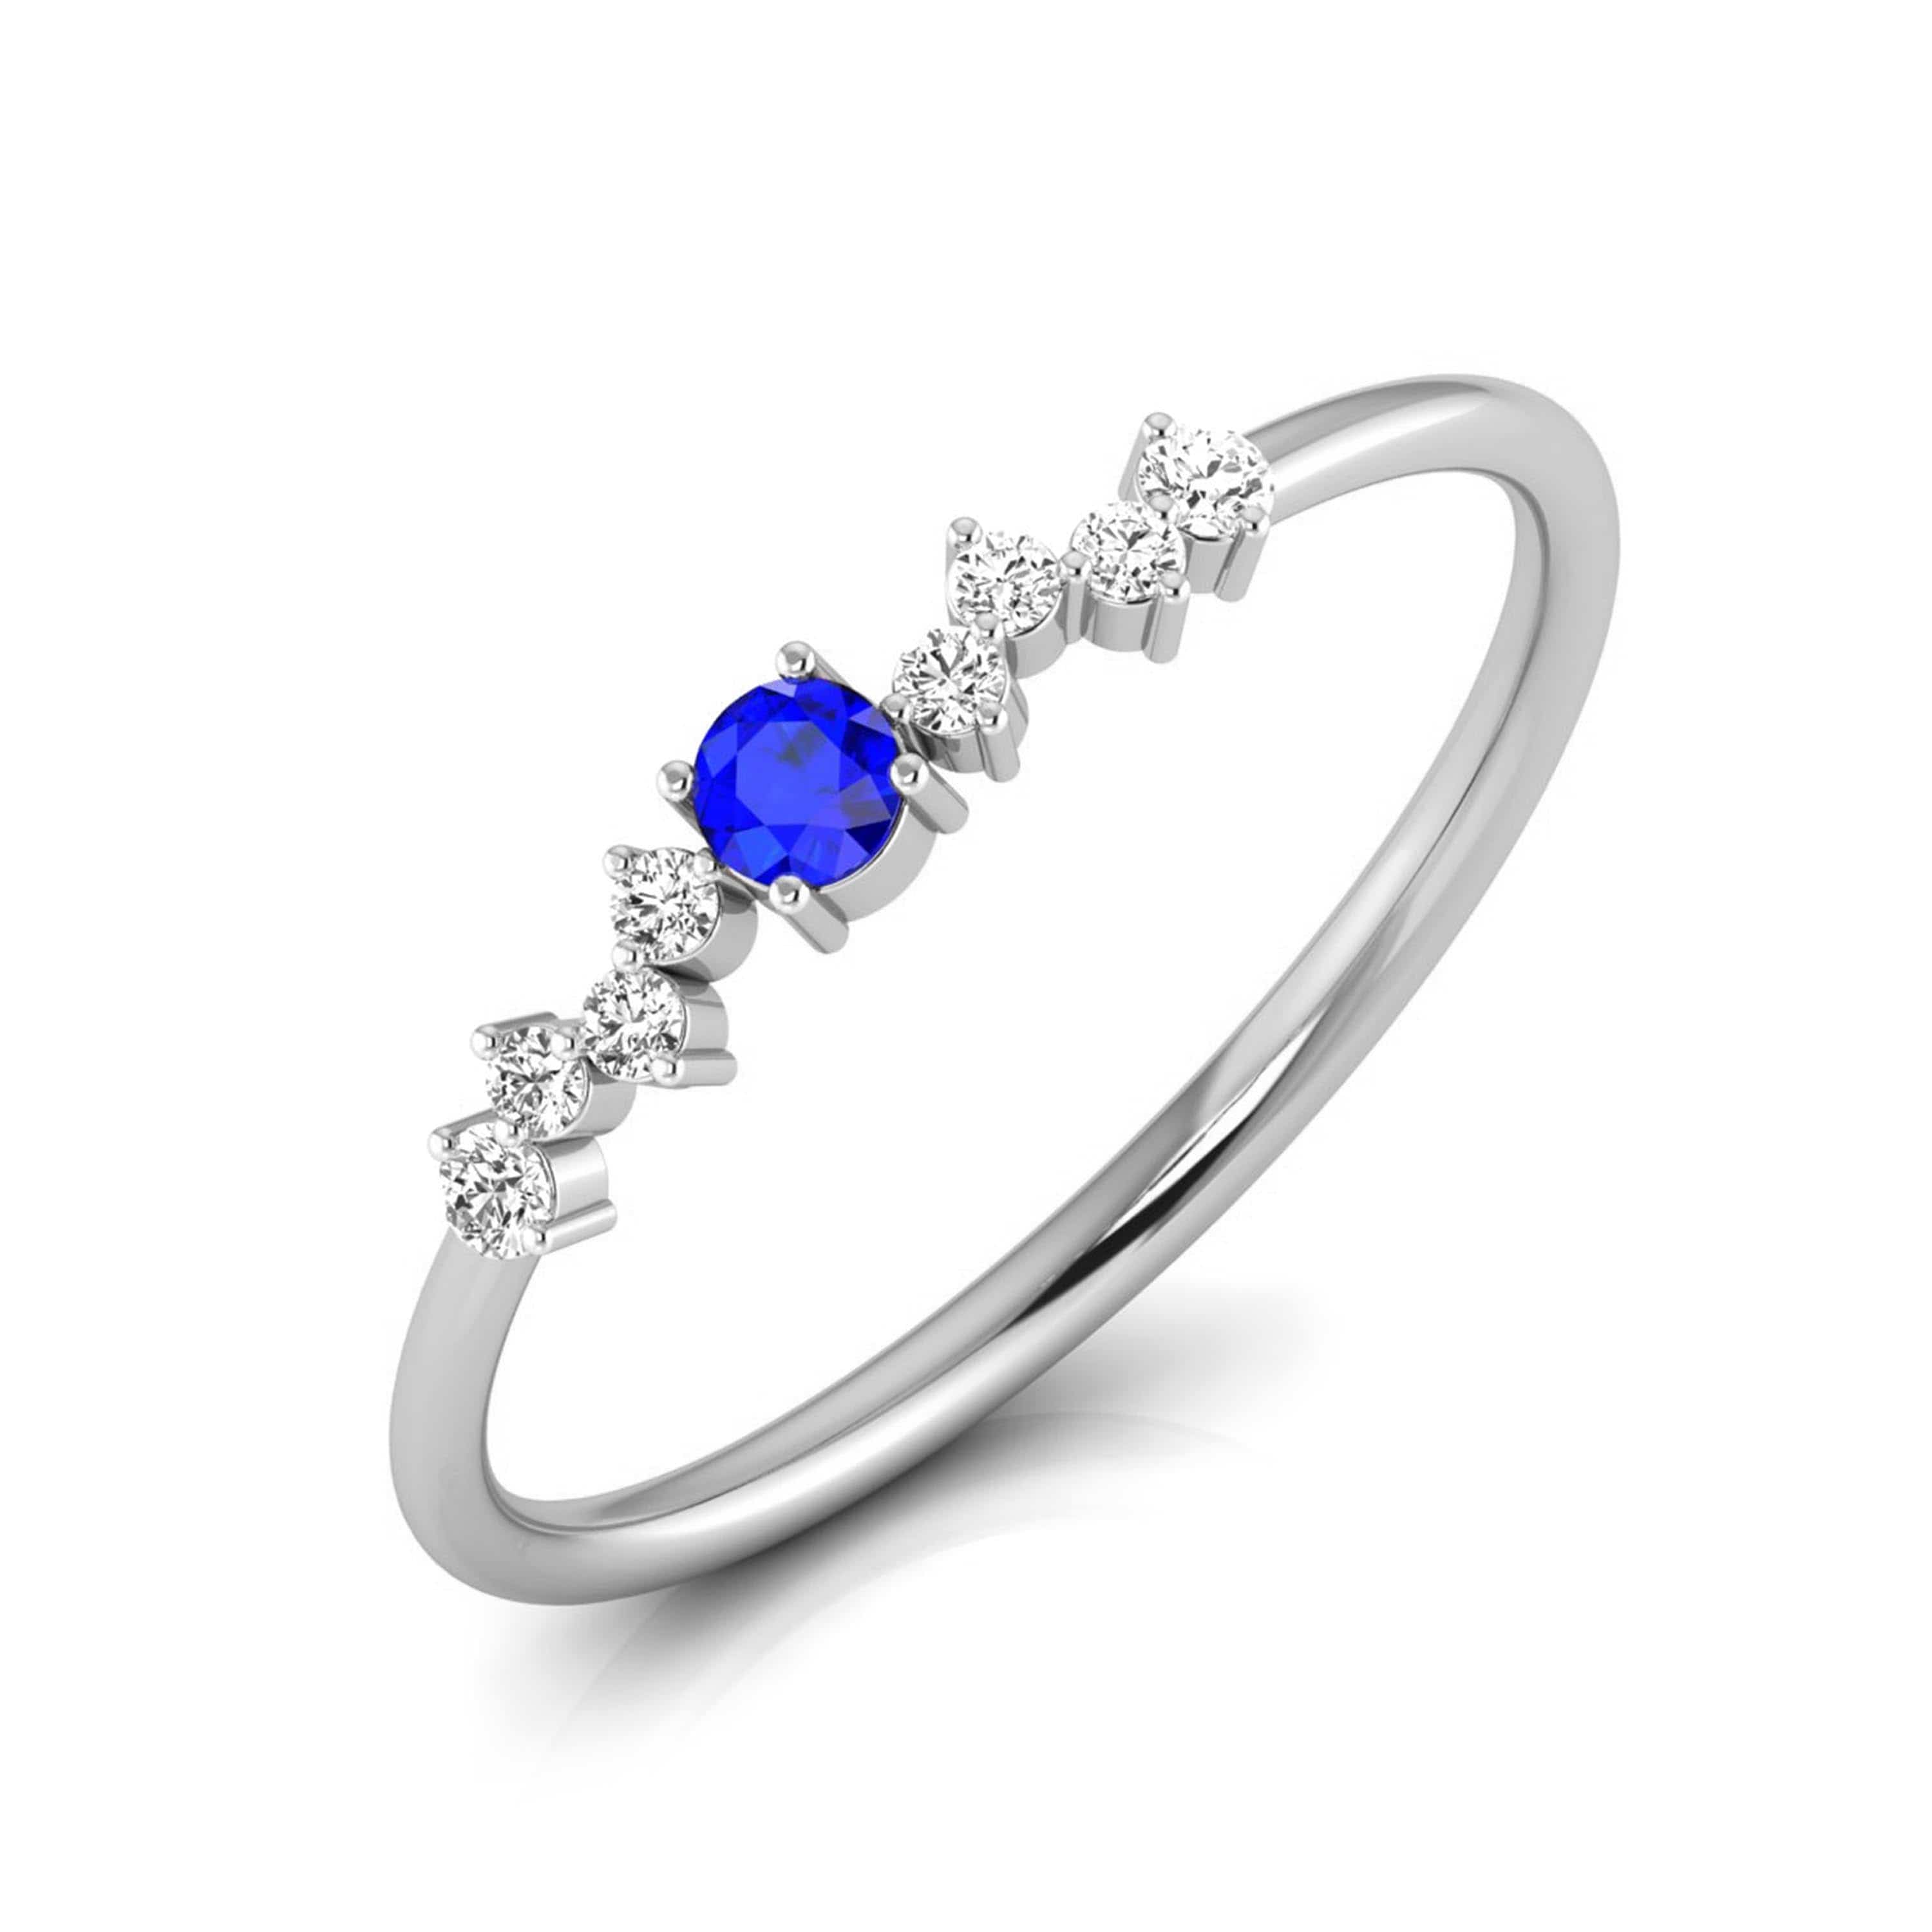 Blue sapphire engagement ring with diamonds / Undina | Eden Garden Jewelry™